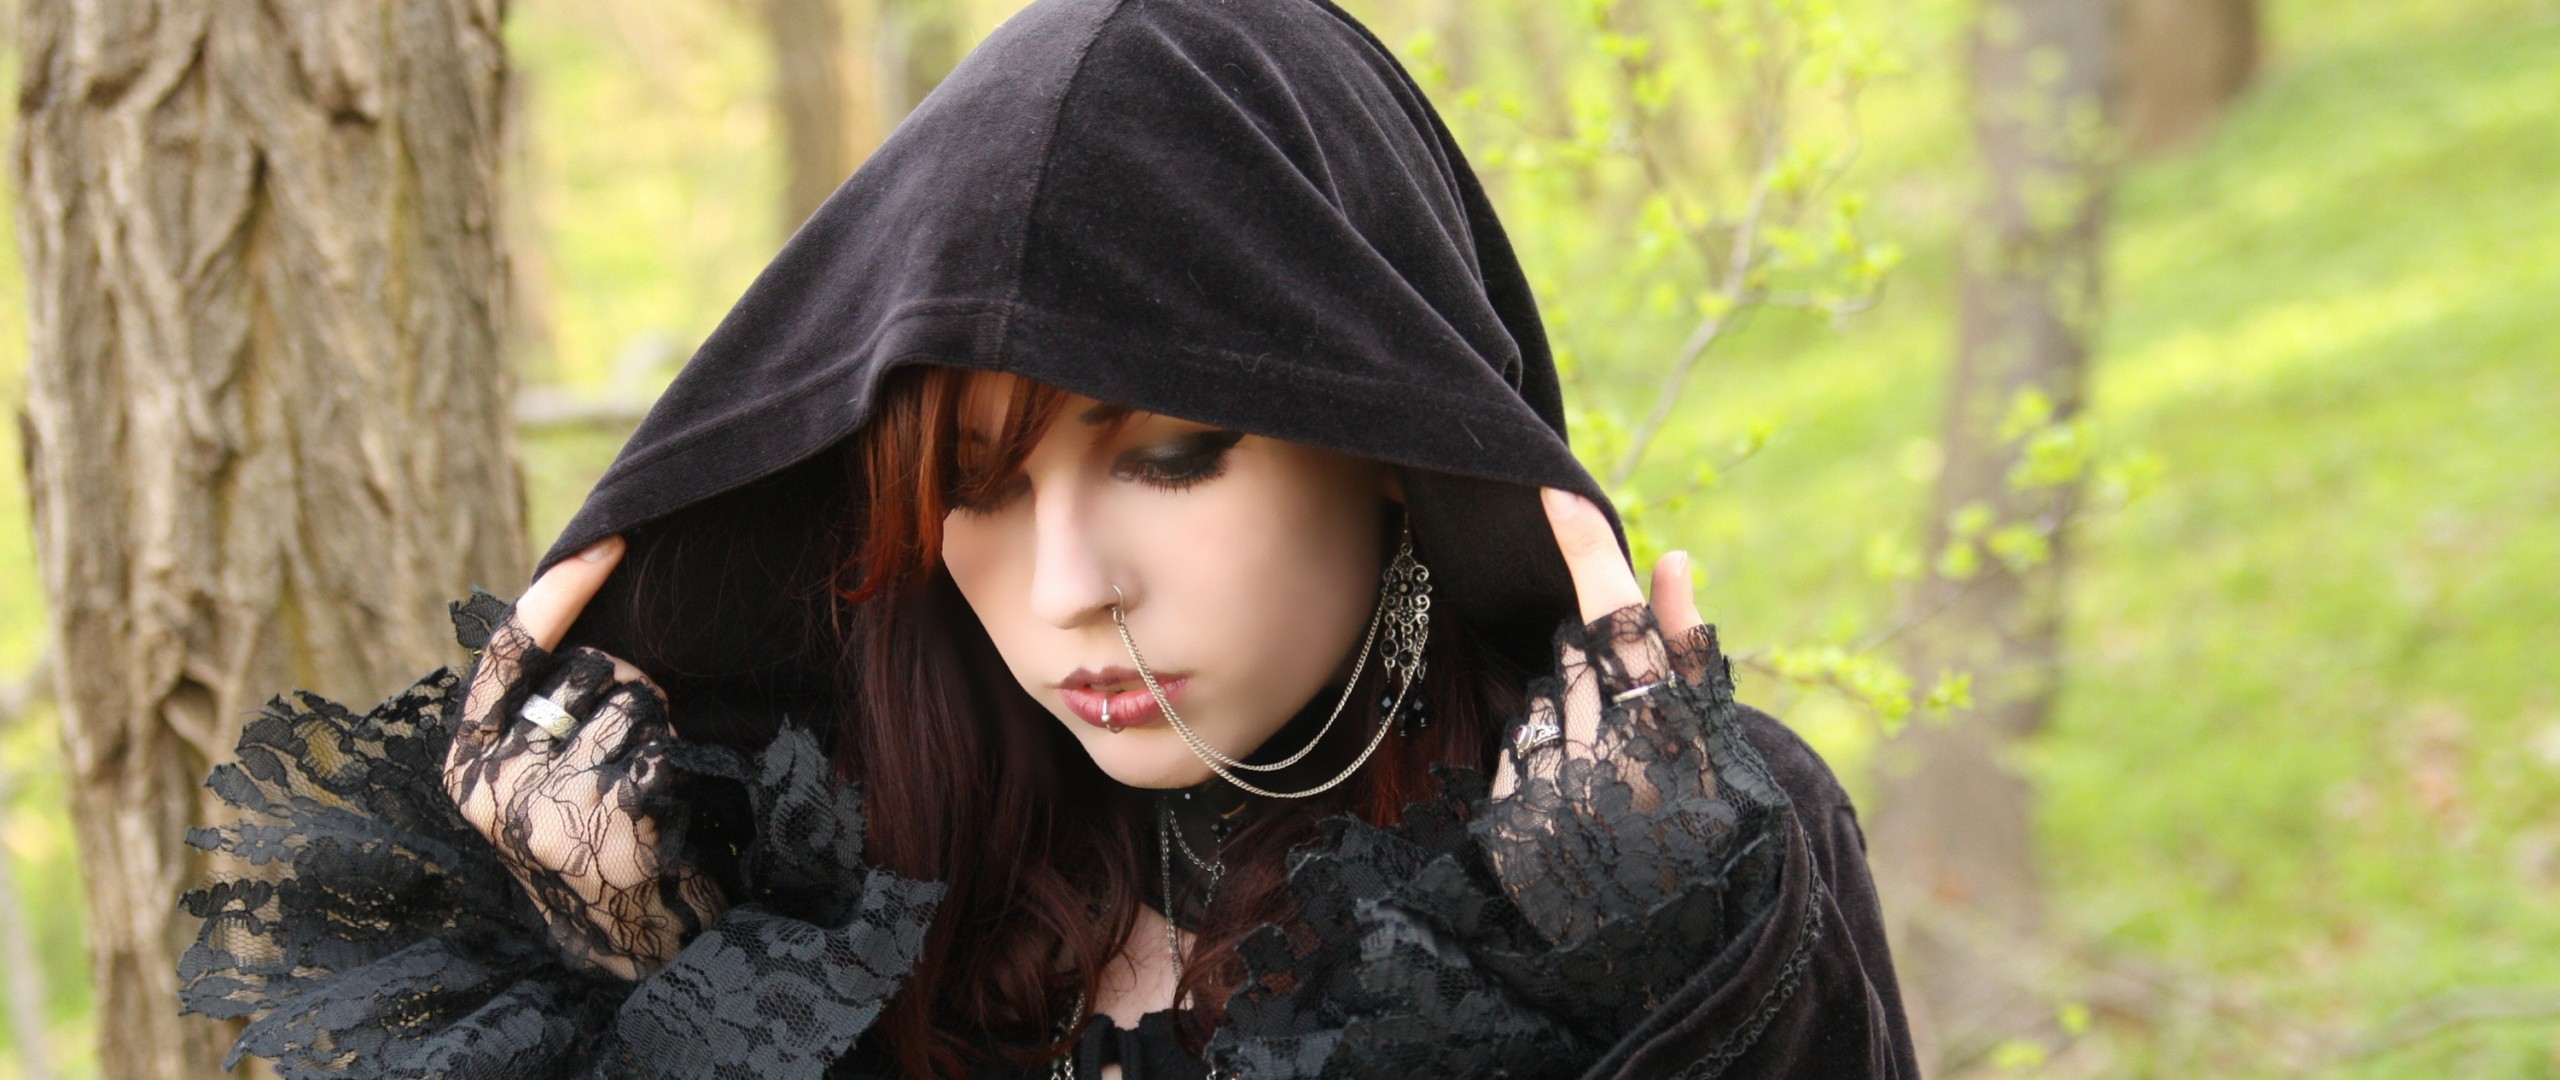 Gothic Piercing Women Hoods Redhead Eyeliner Black Clothing Nose Ring Pierced Lip Fair Skin 2560x1080